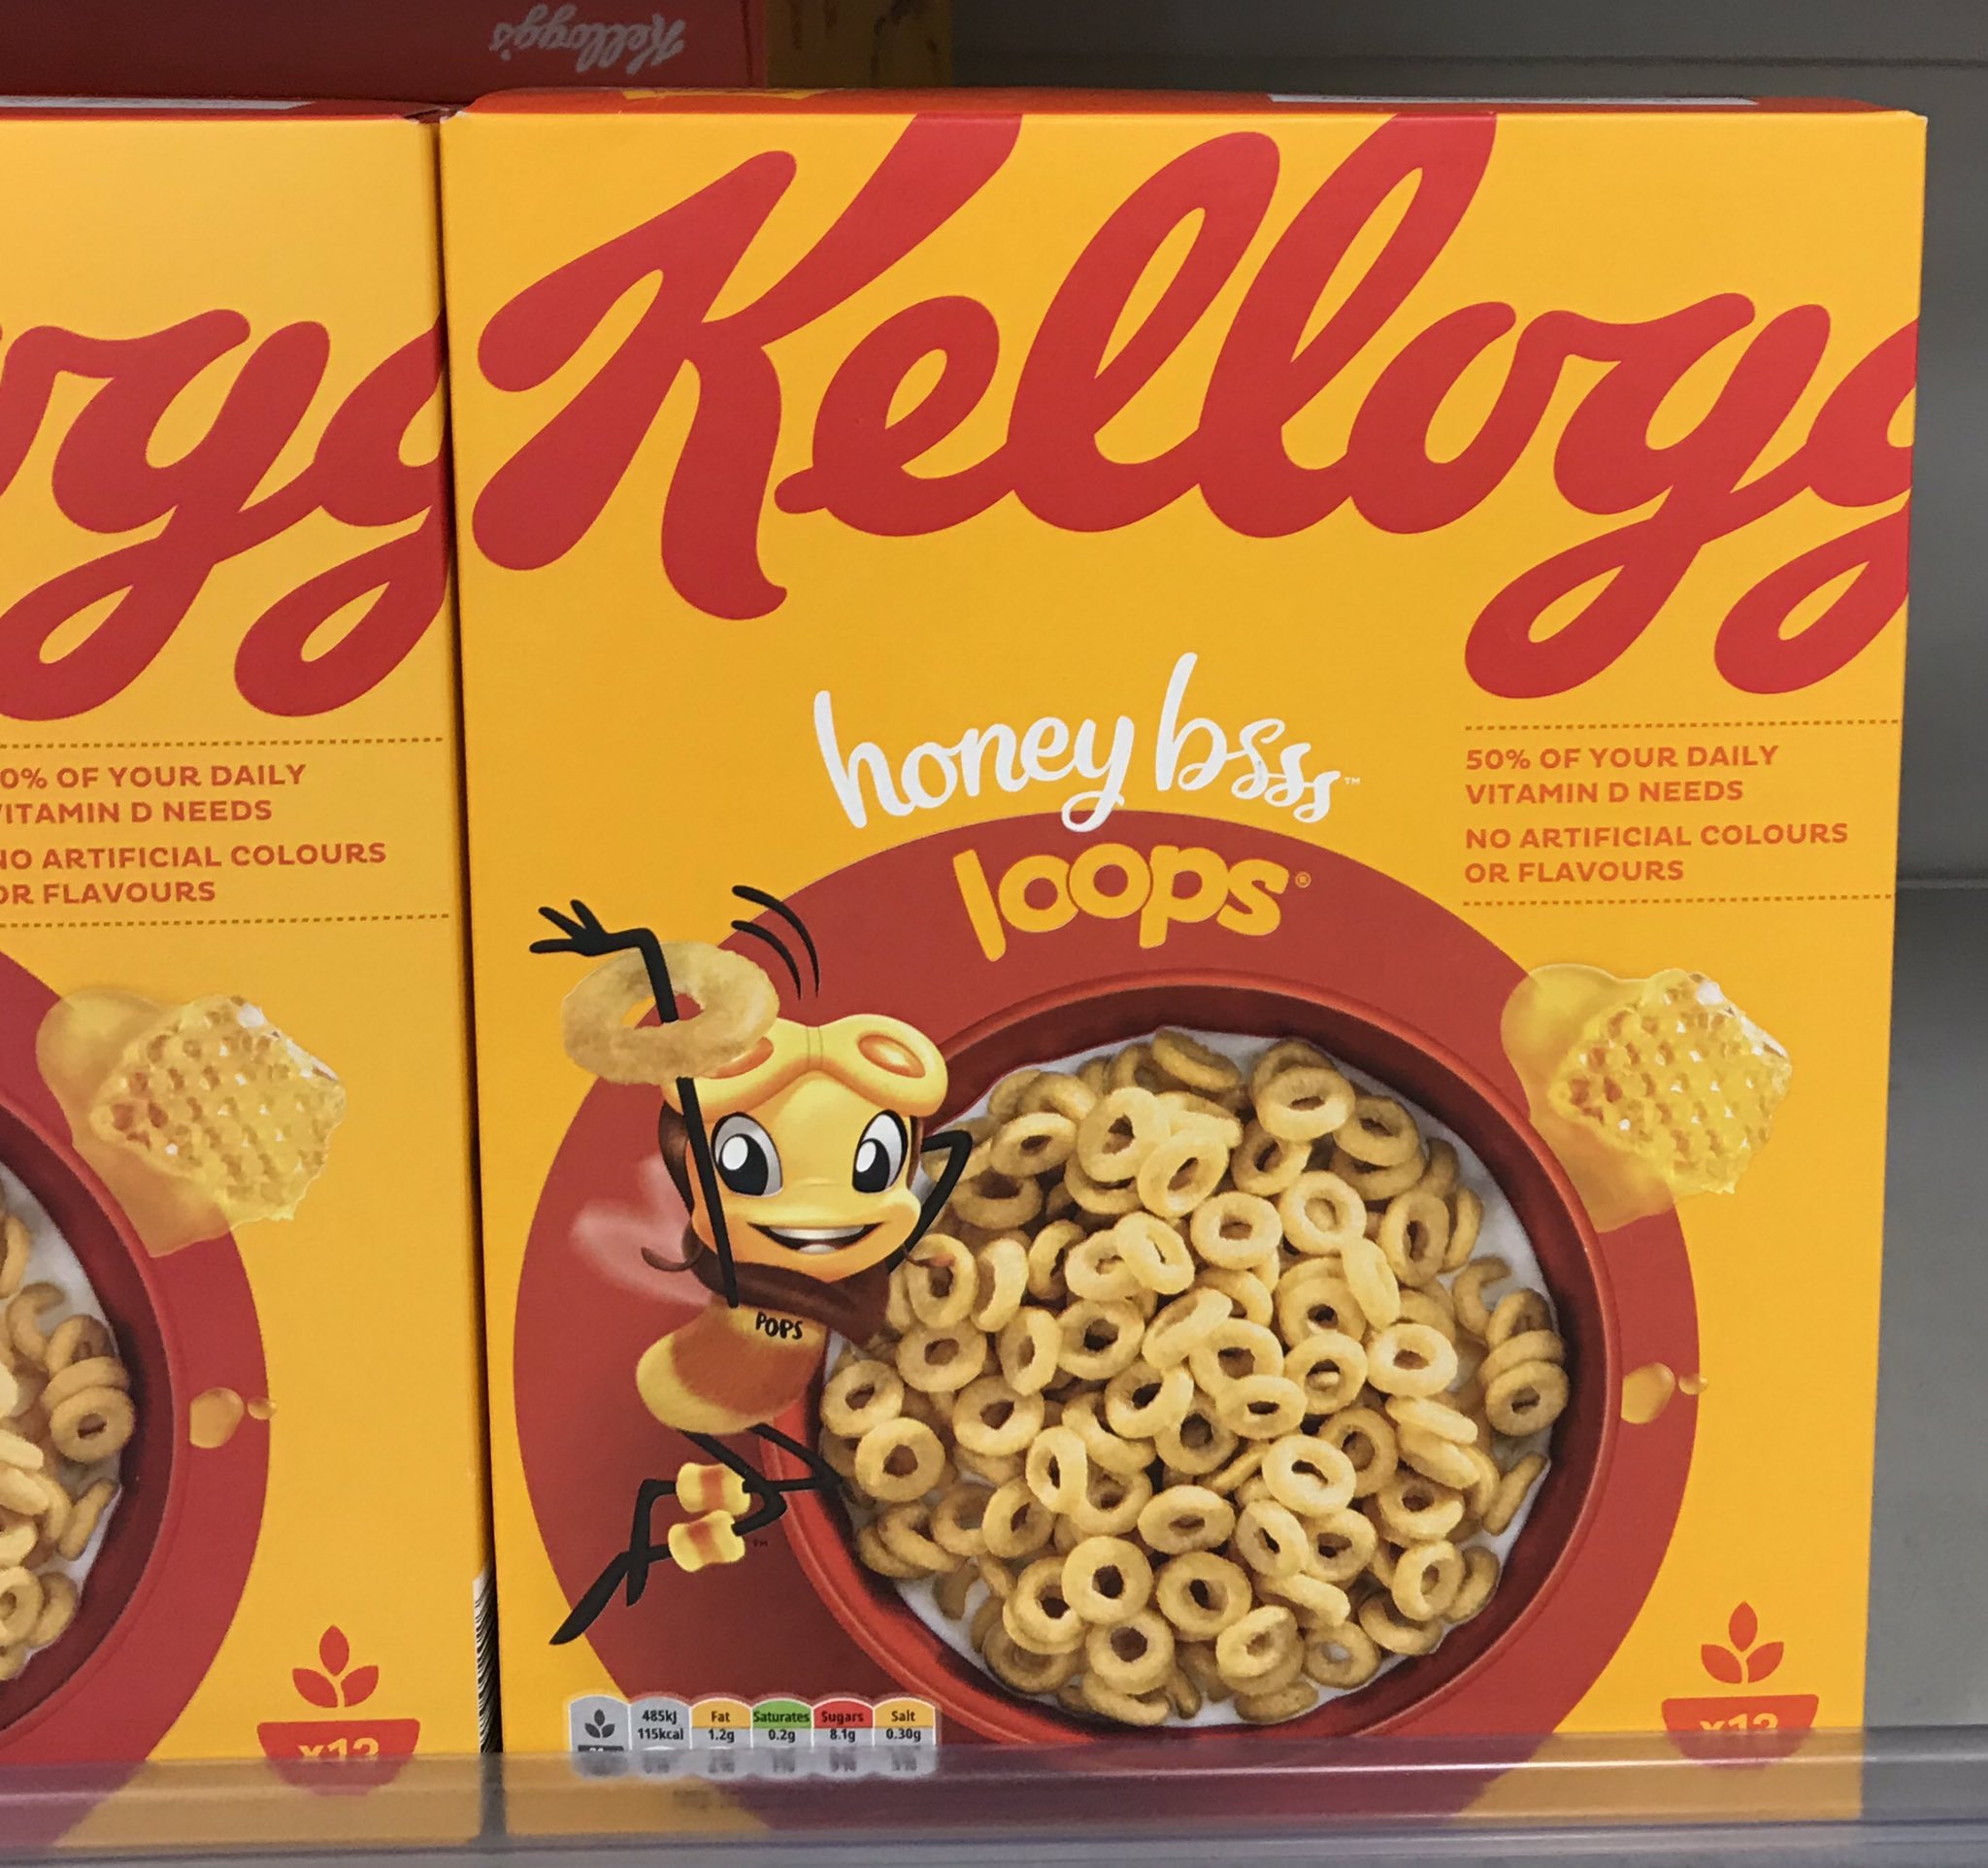 Well This Is on Twitter: "New look Kellogg's Honey Bsss Loops! 🍯 At Iceland @KelloggsUK #kelloggs #honey #cereal #breakfast #wellthisisnew / Twitter